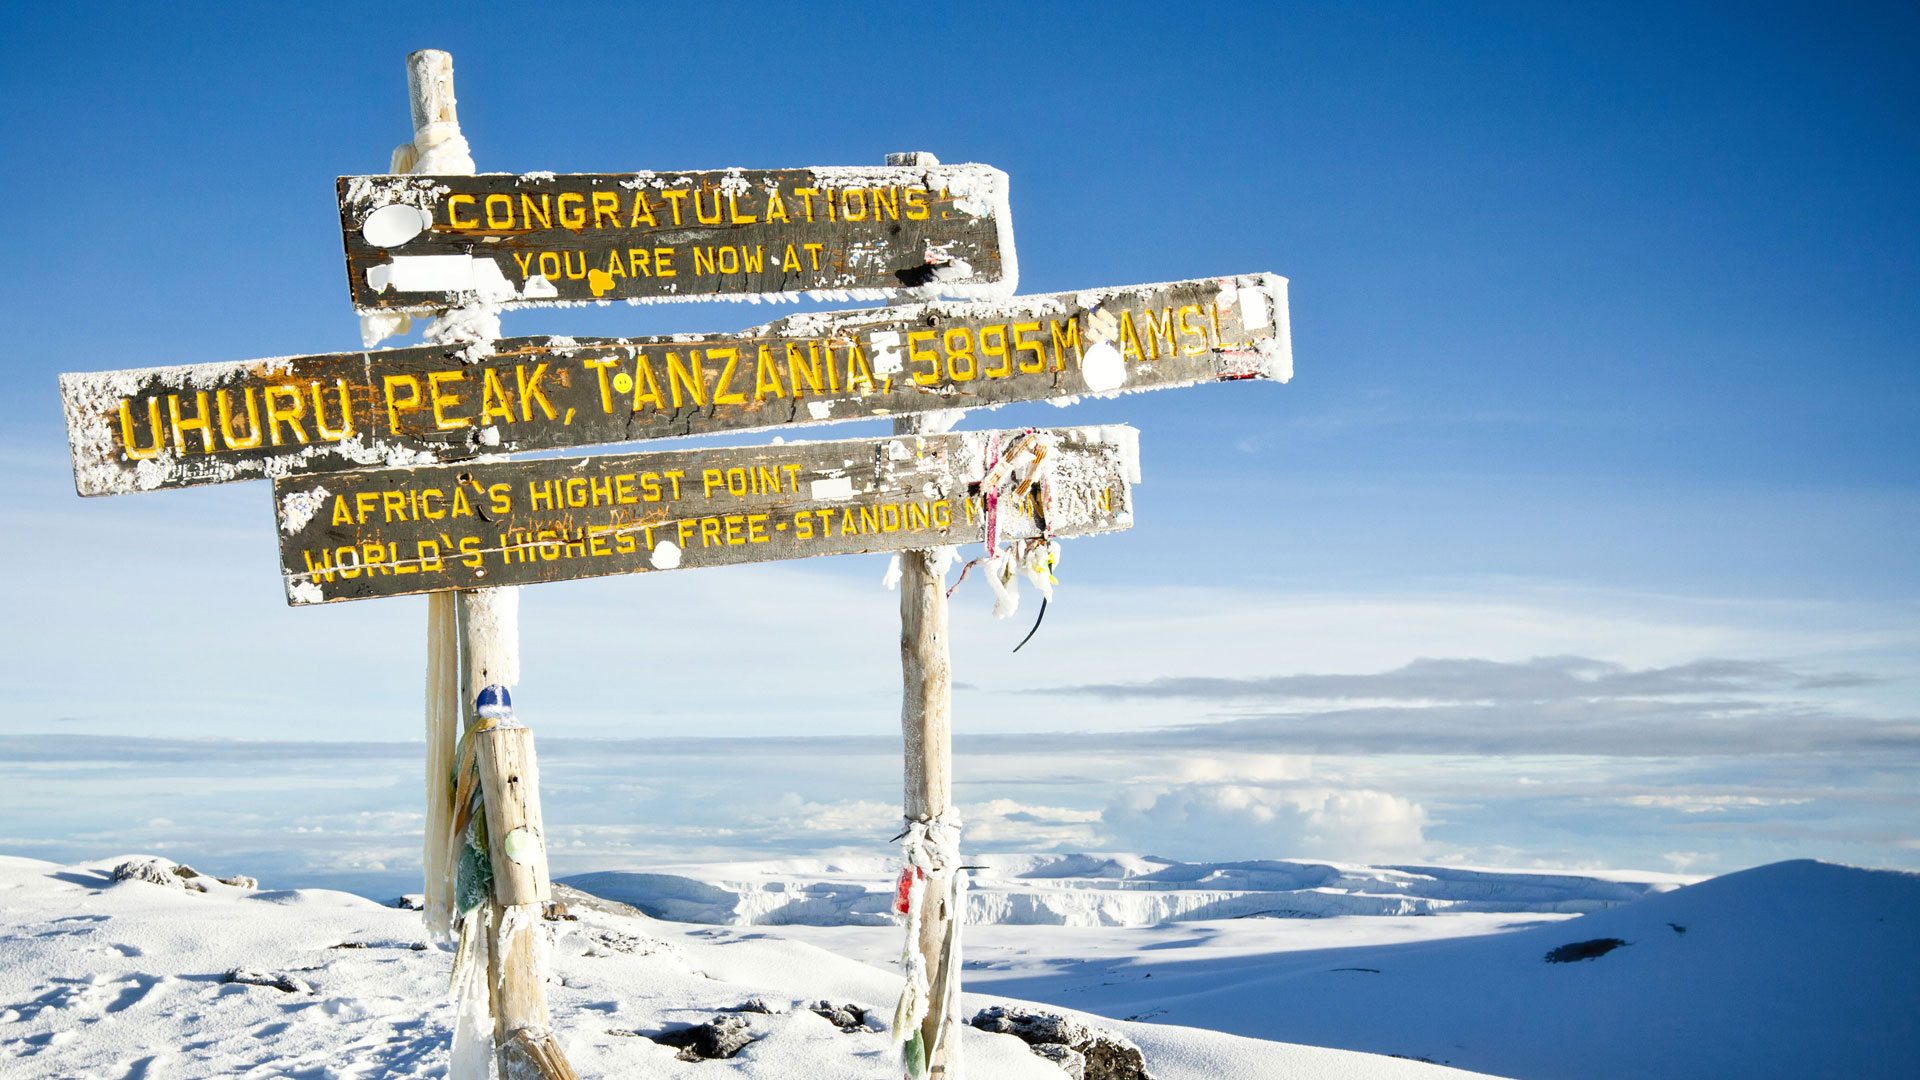 http://www.kilingeadventures.com/wp-content/uploads/2020/11/Kilimanjaro-Climbing-Packages-1.jpg